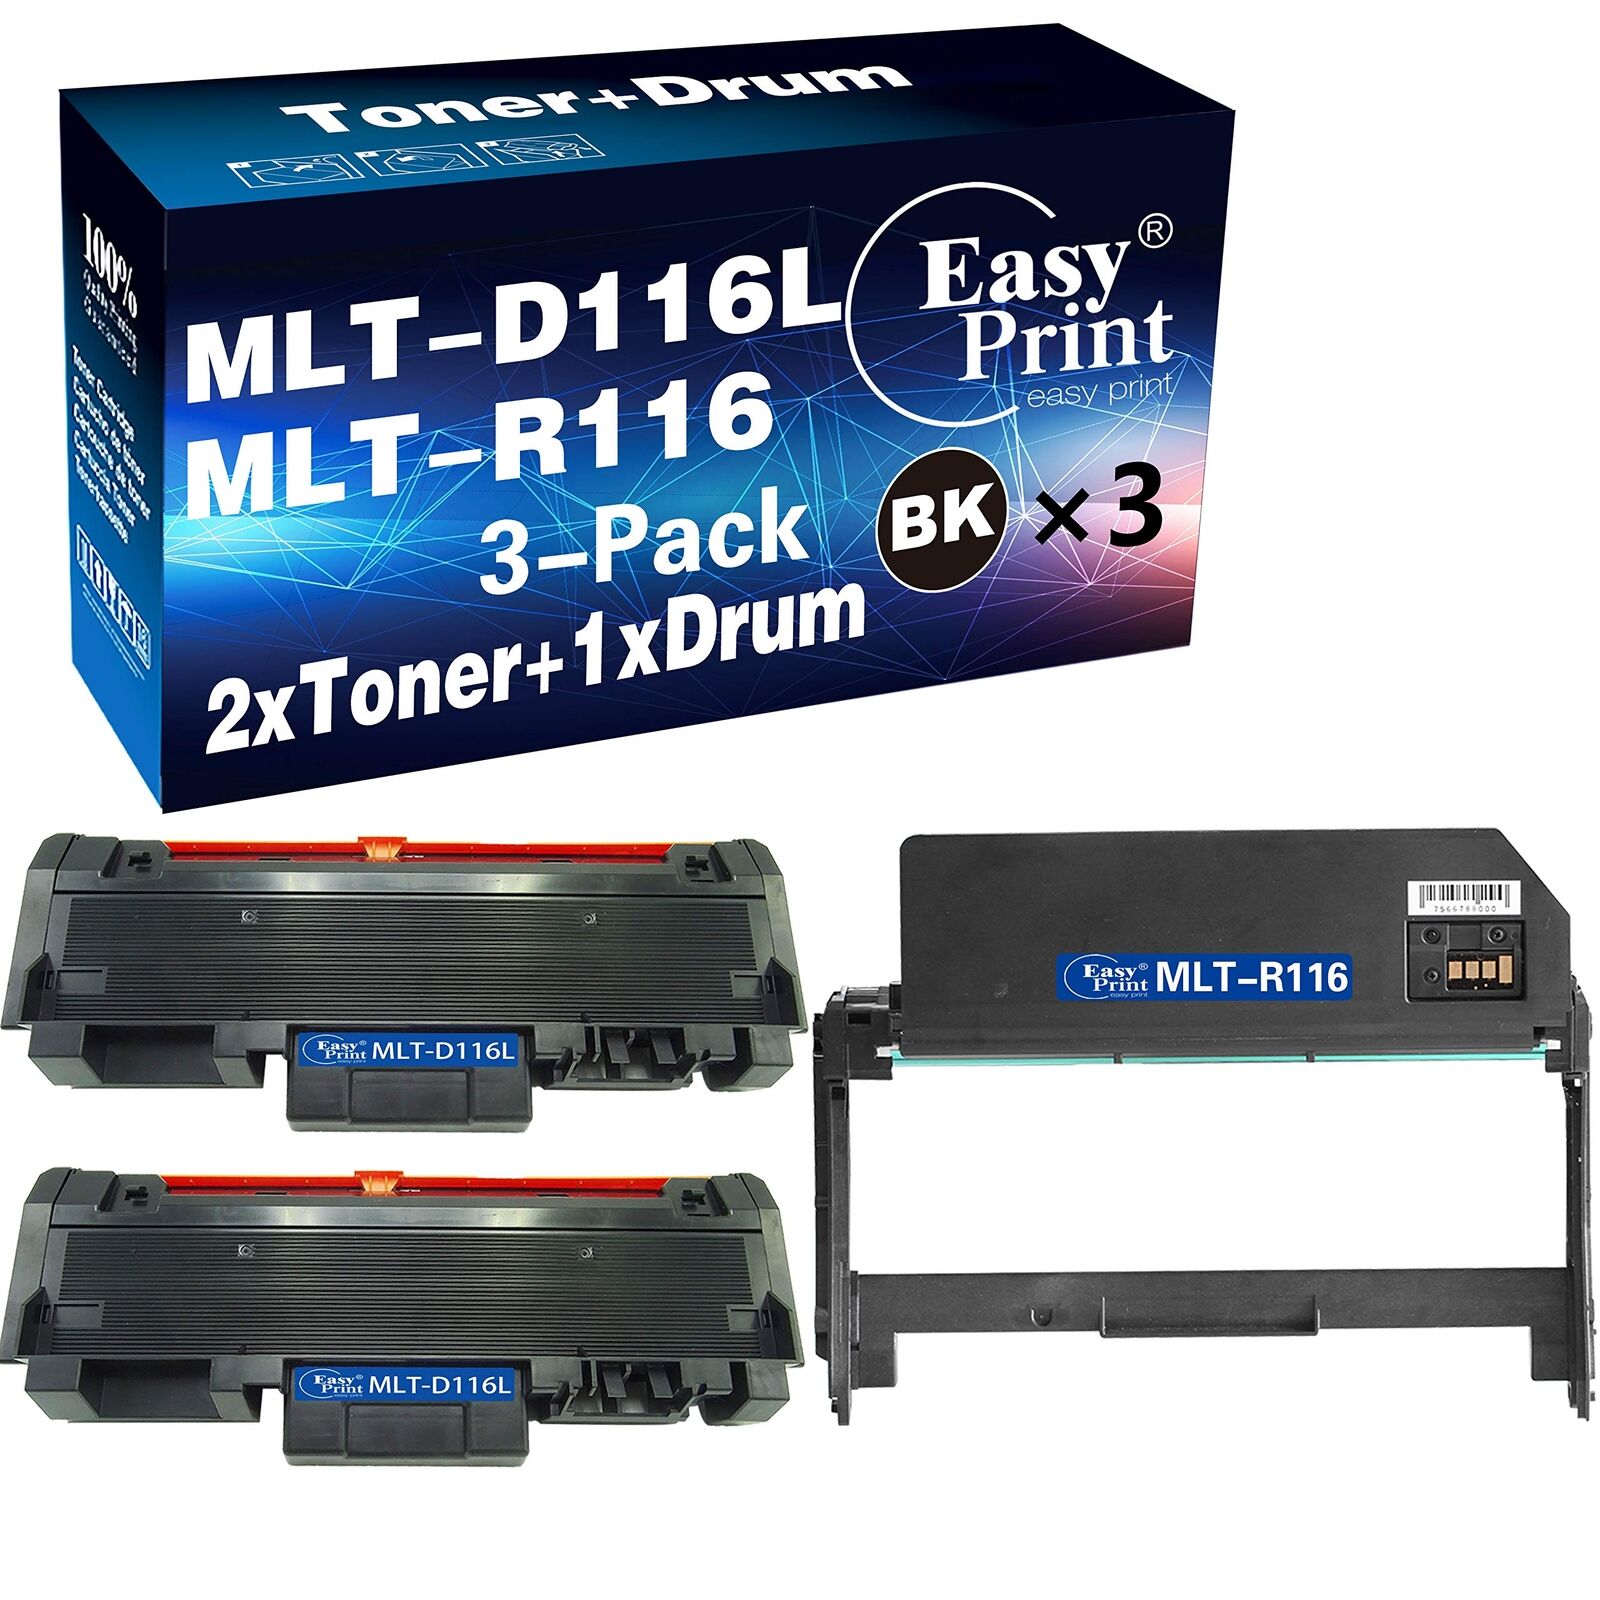 EASYPRINT (Toner with Drum Kit) Compatible MLT-D116L Toner Cartridge & Drum U...